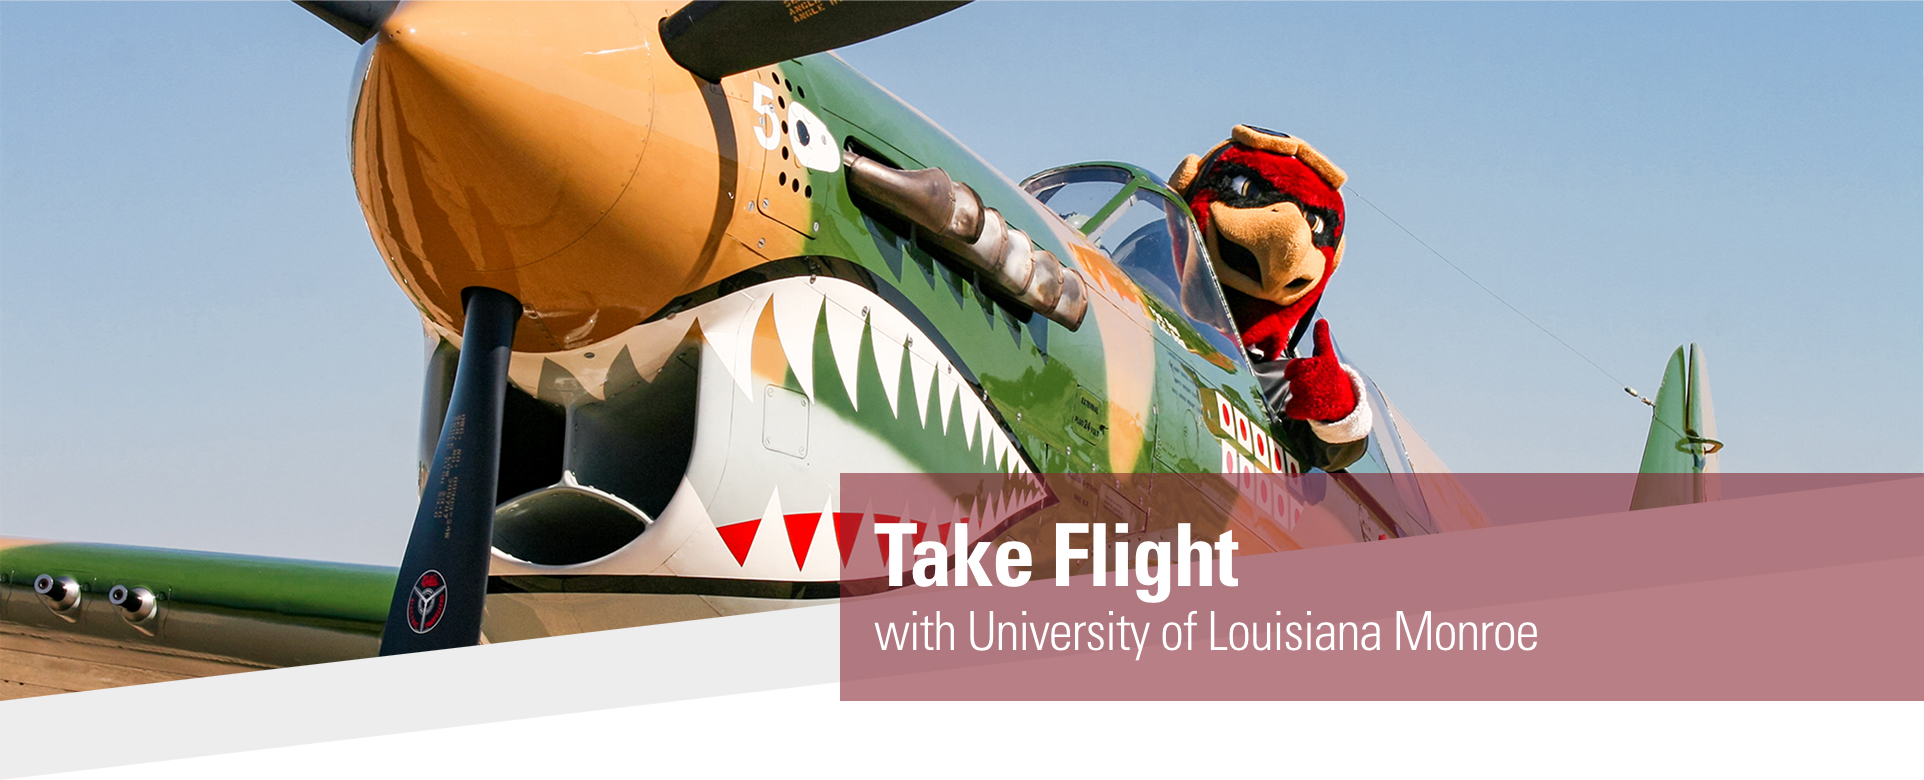 Take Flight with University of Louisiana Monroe